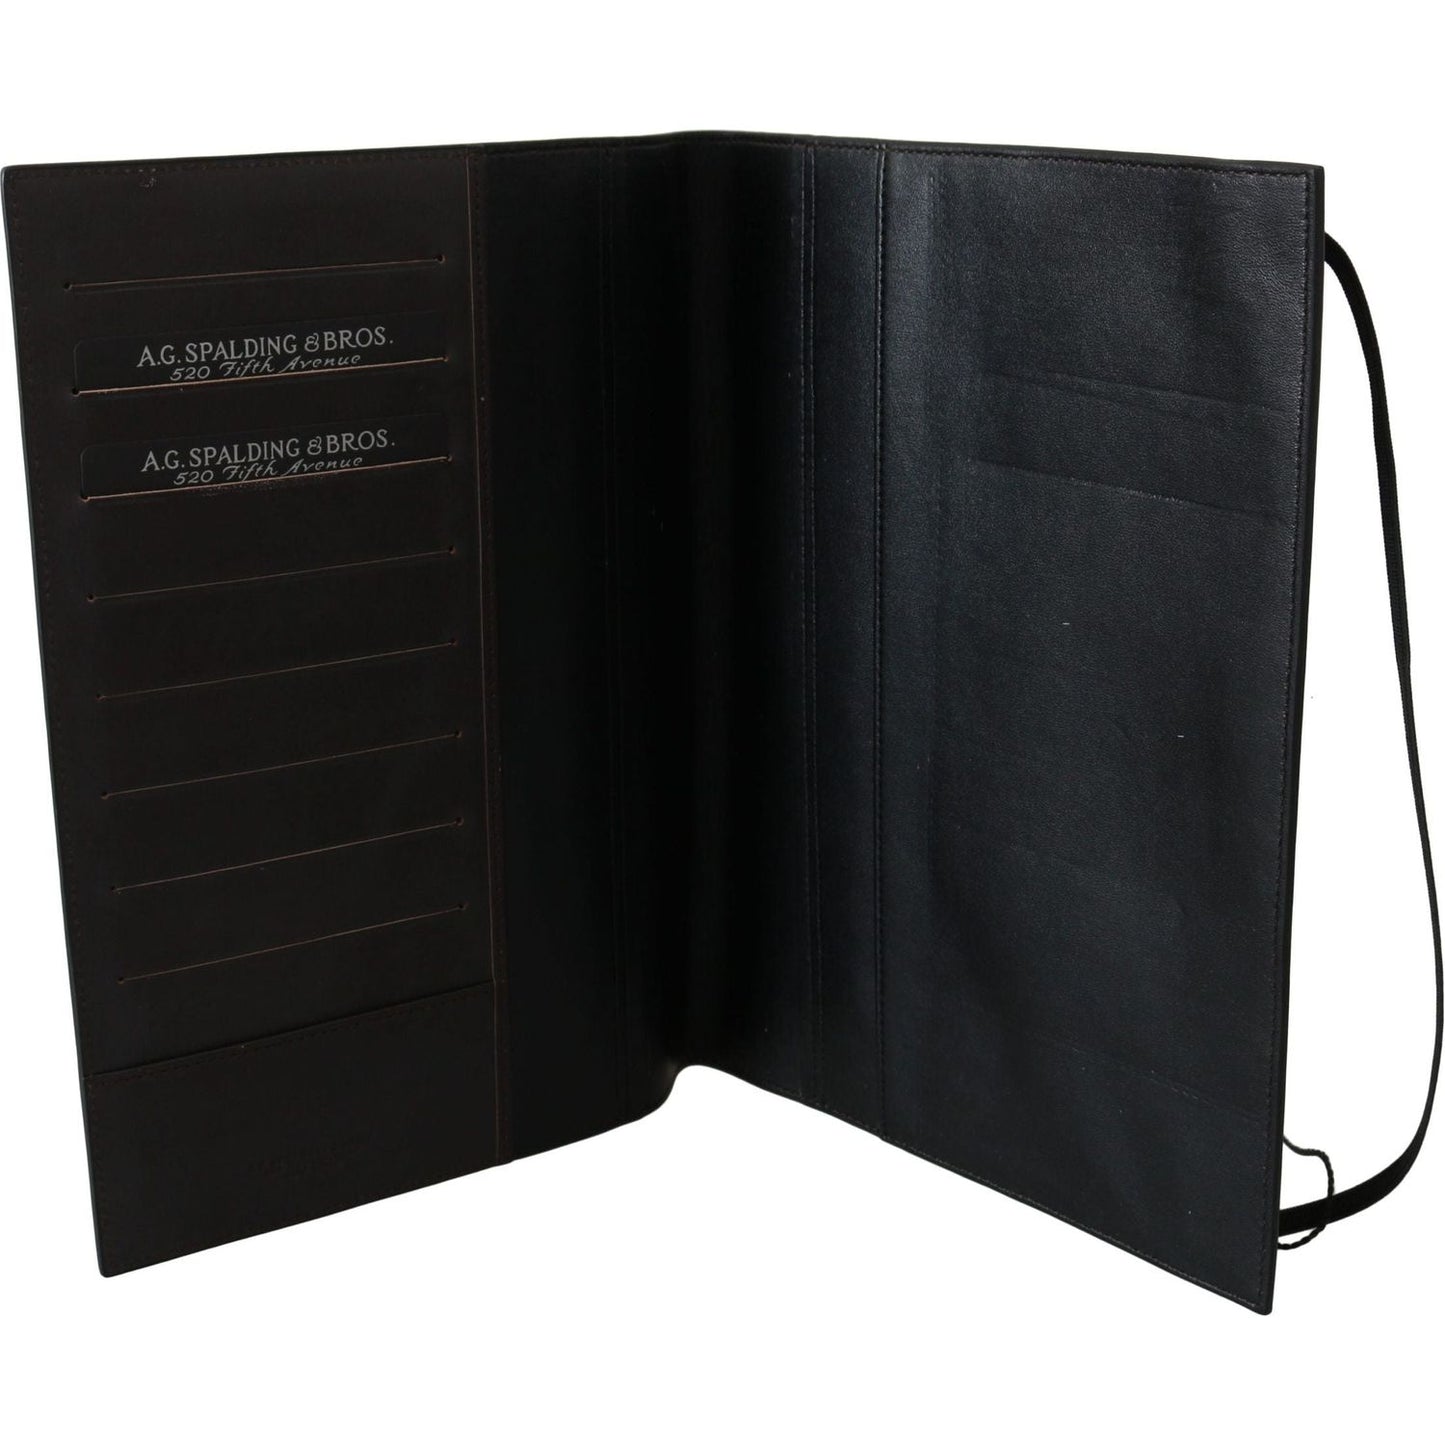 A.G. Spalding & Bros Elegant Leather Passport Wallet - Sleek Travel Essential black-leather-bifold-travel-holder-logo-wallet